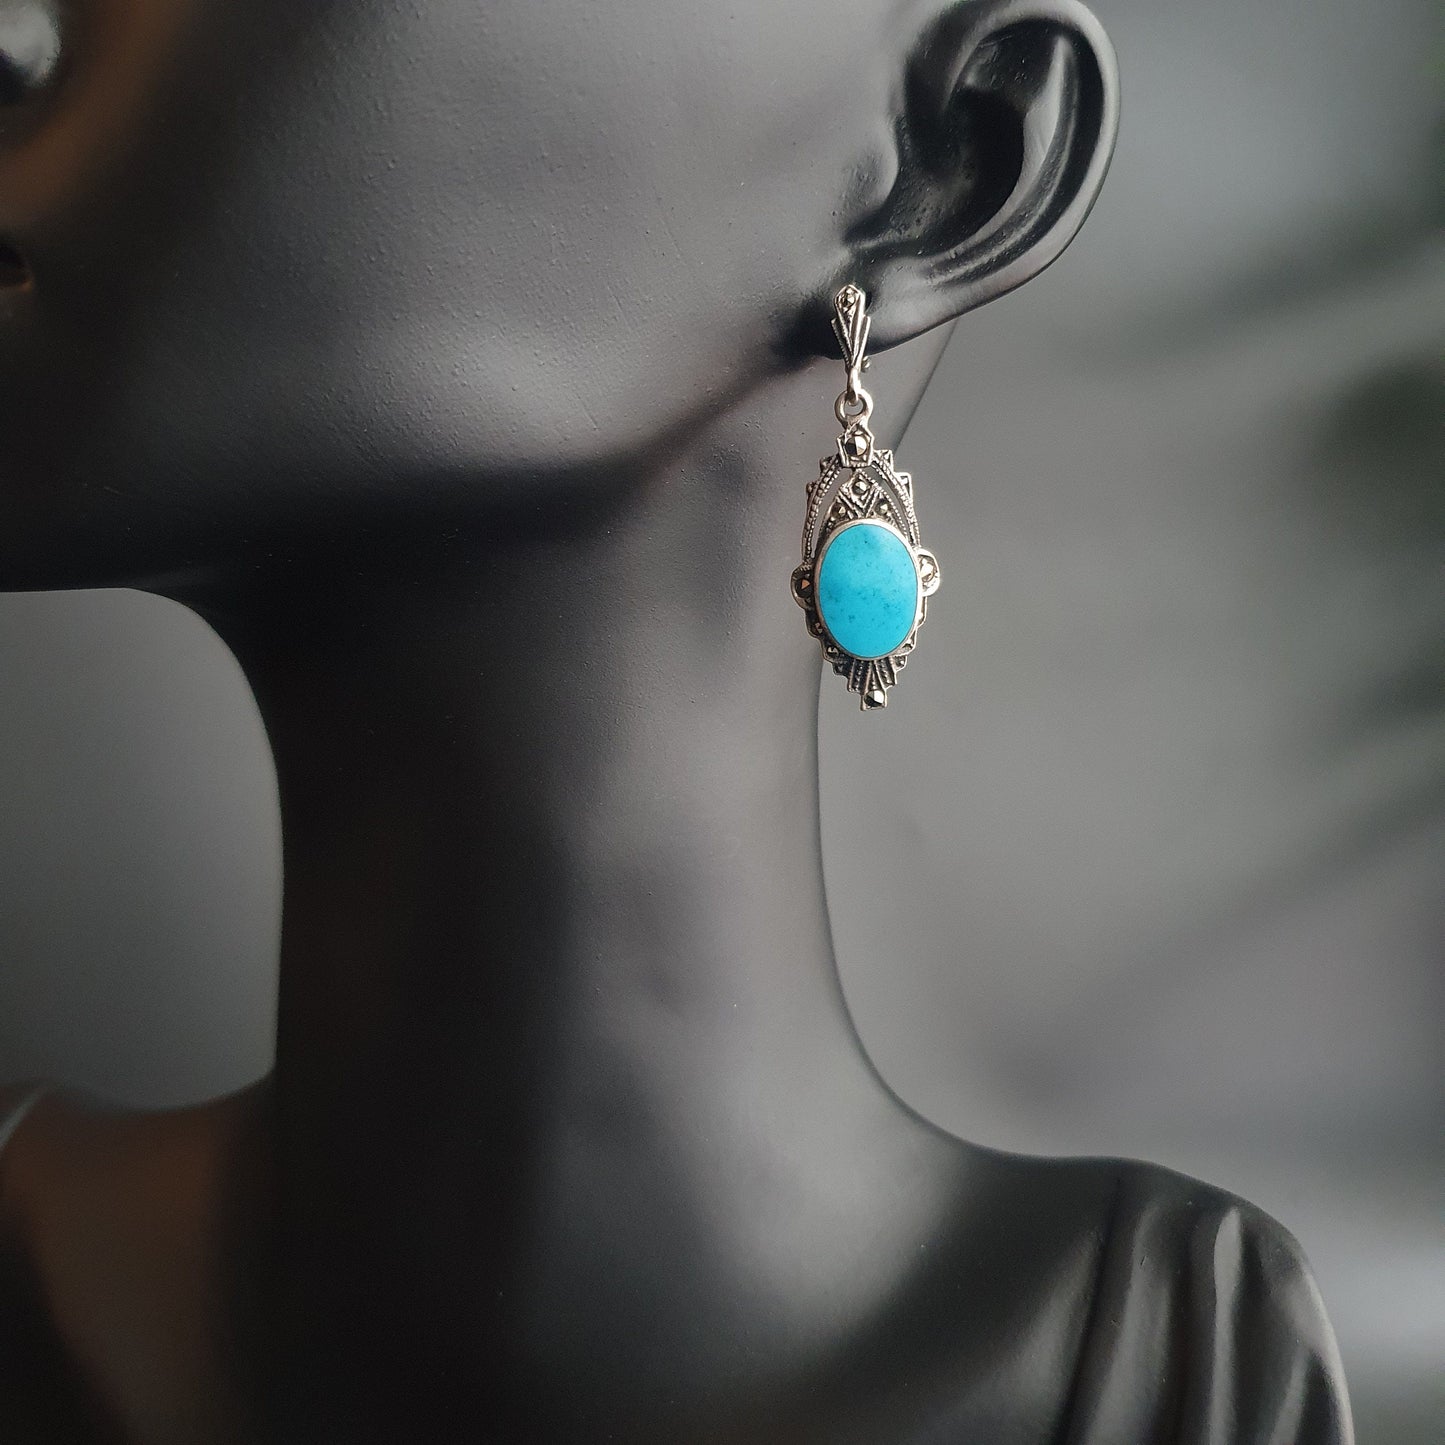 Silver earrings, Victorian earrings, vintage earrings, antique earrings, turquoise earrings, sterling silver earrings, statement earrings